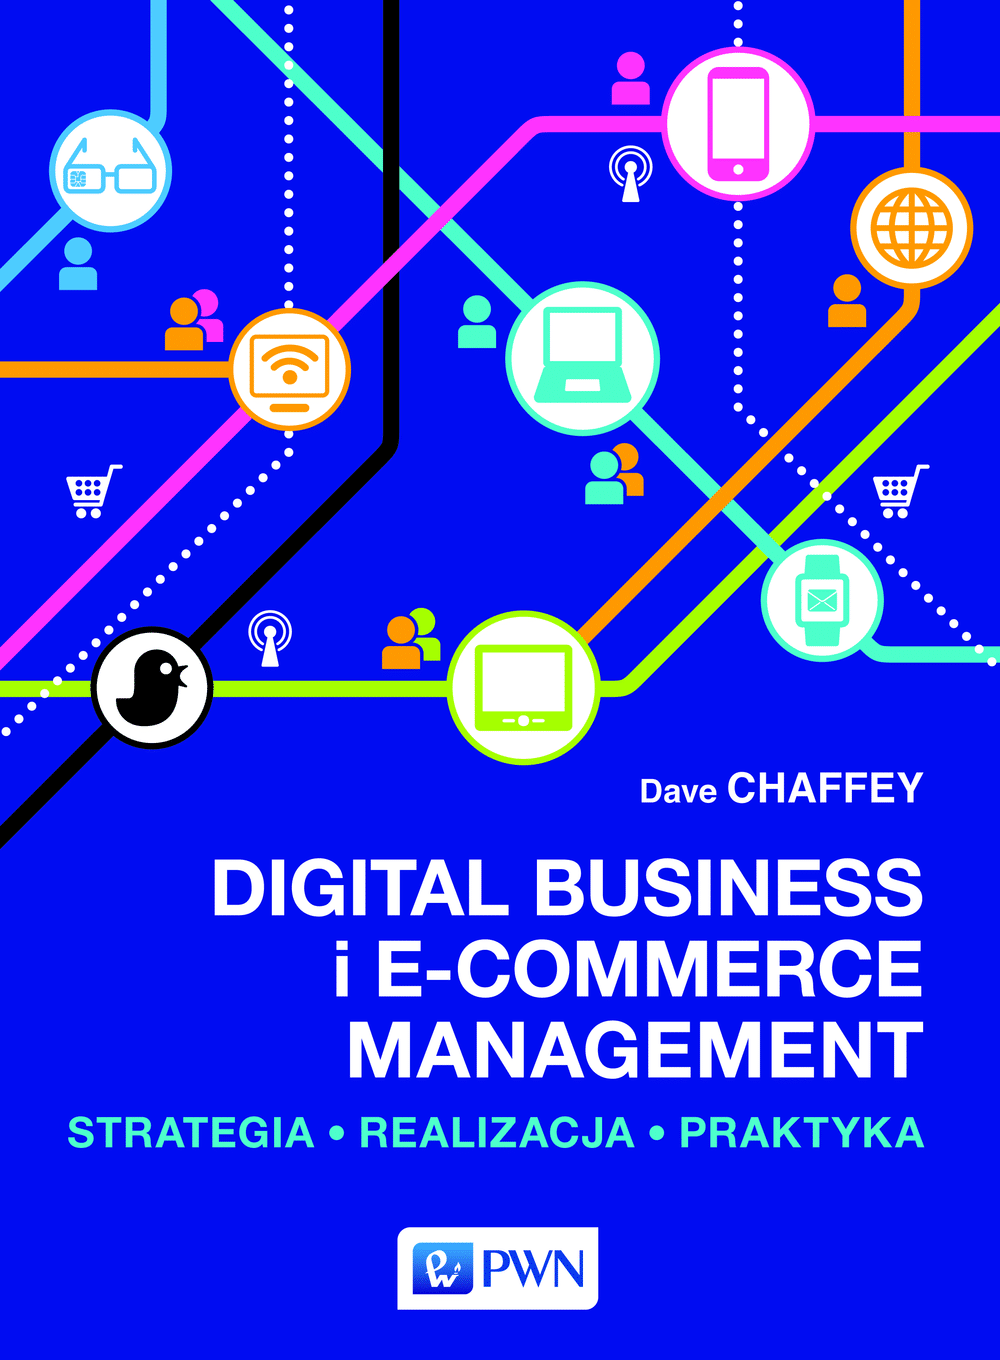 Digital business i e-commerce management strategia realizacja praktyka